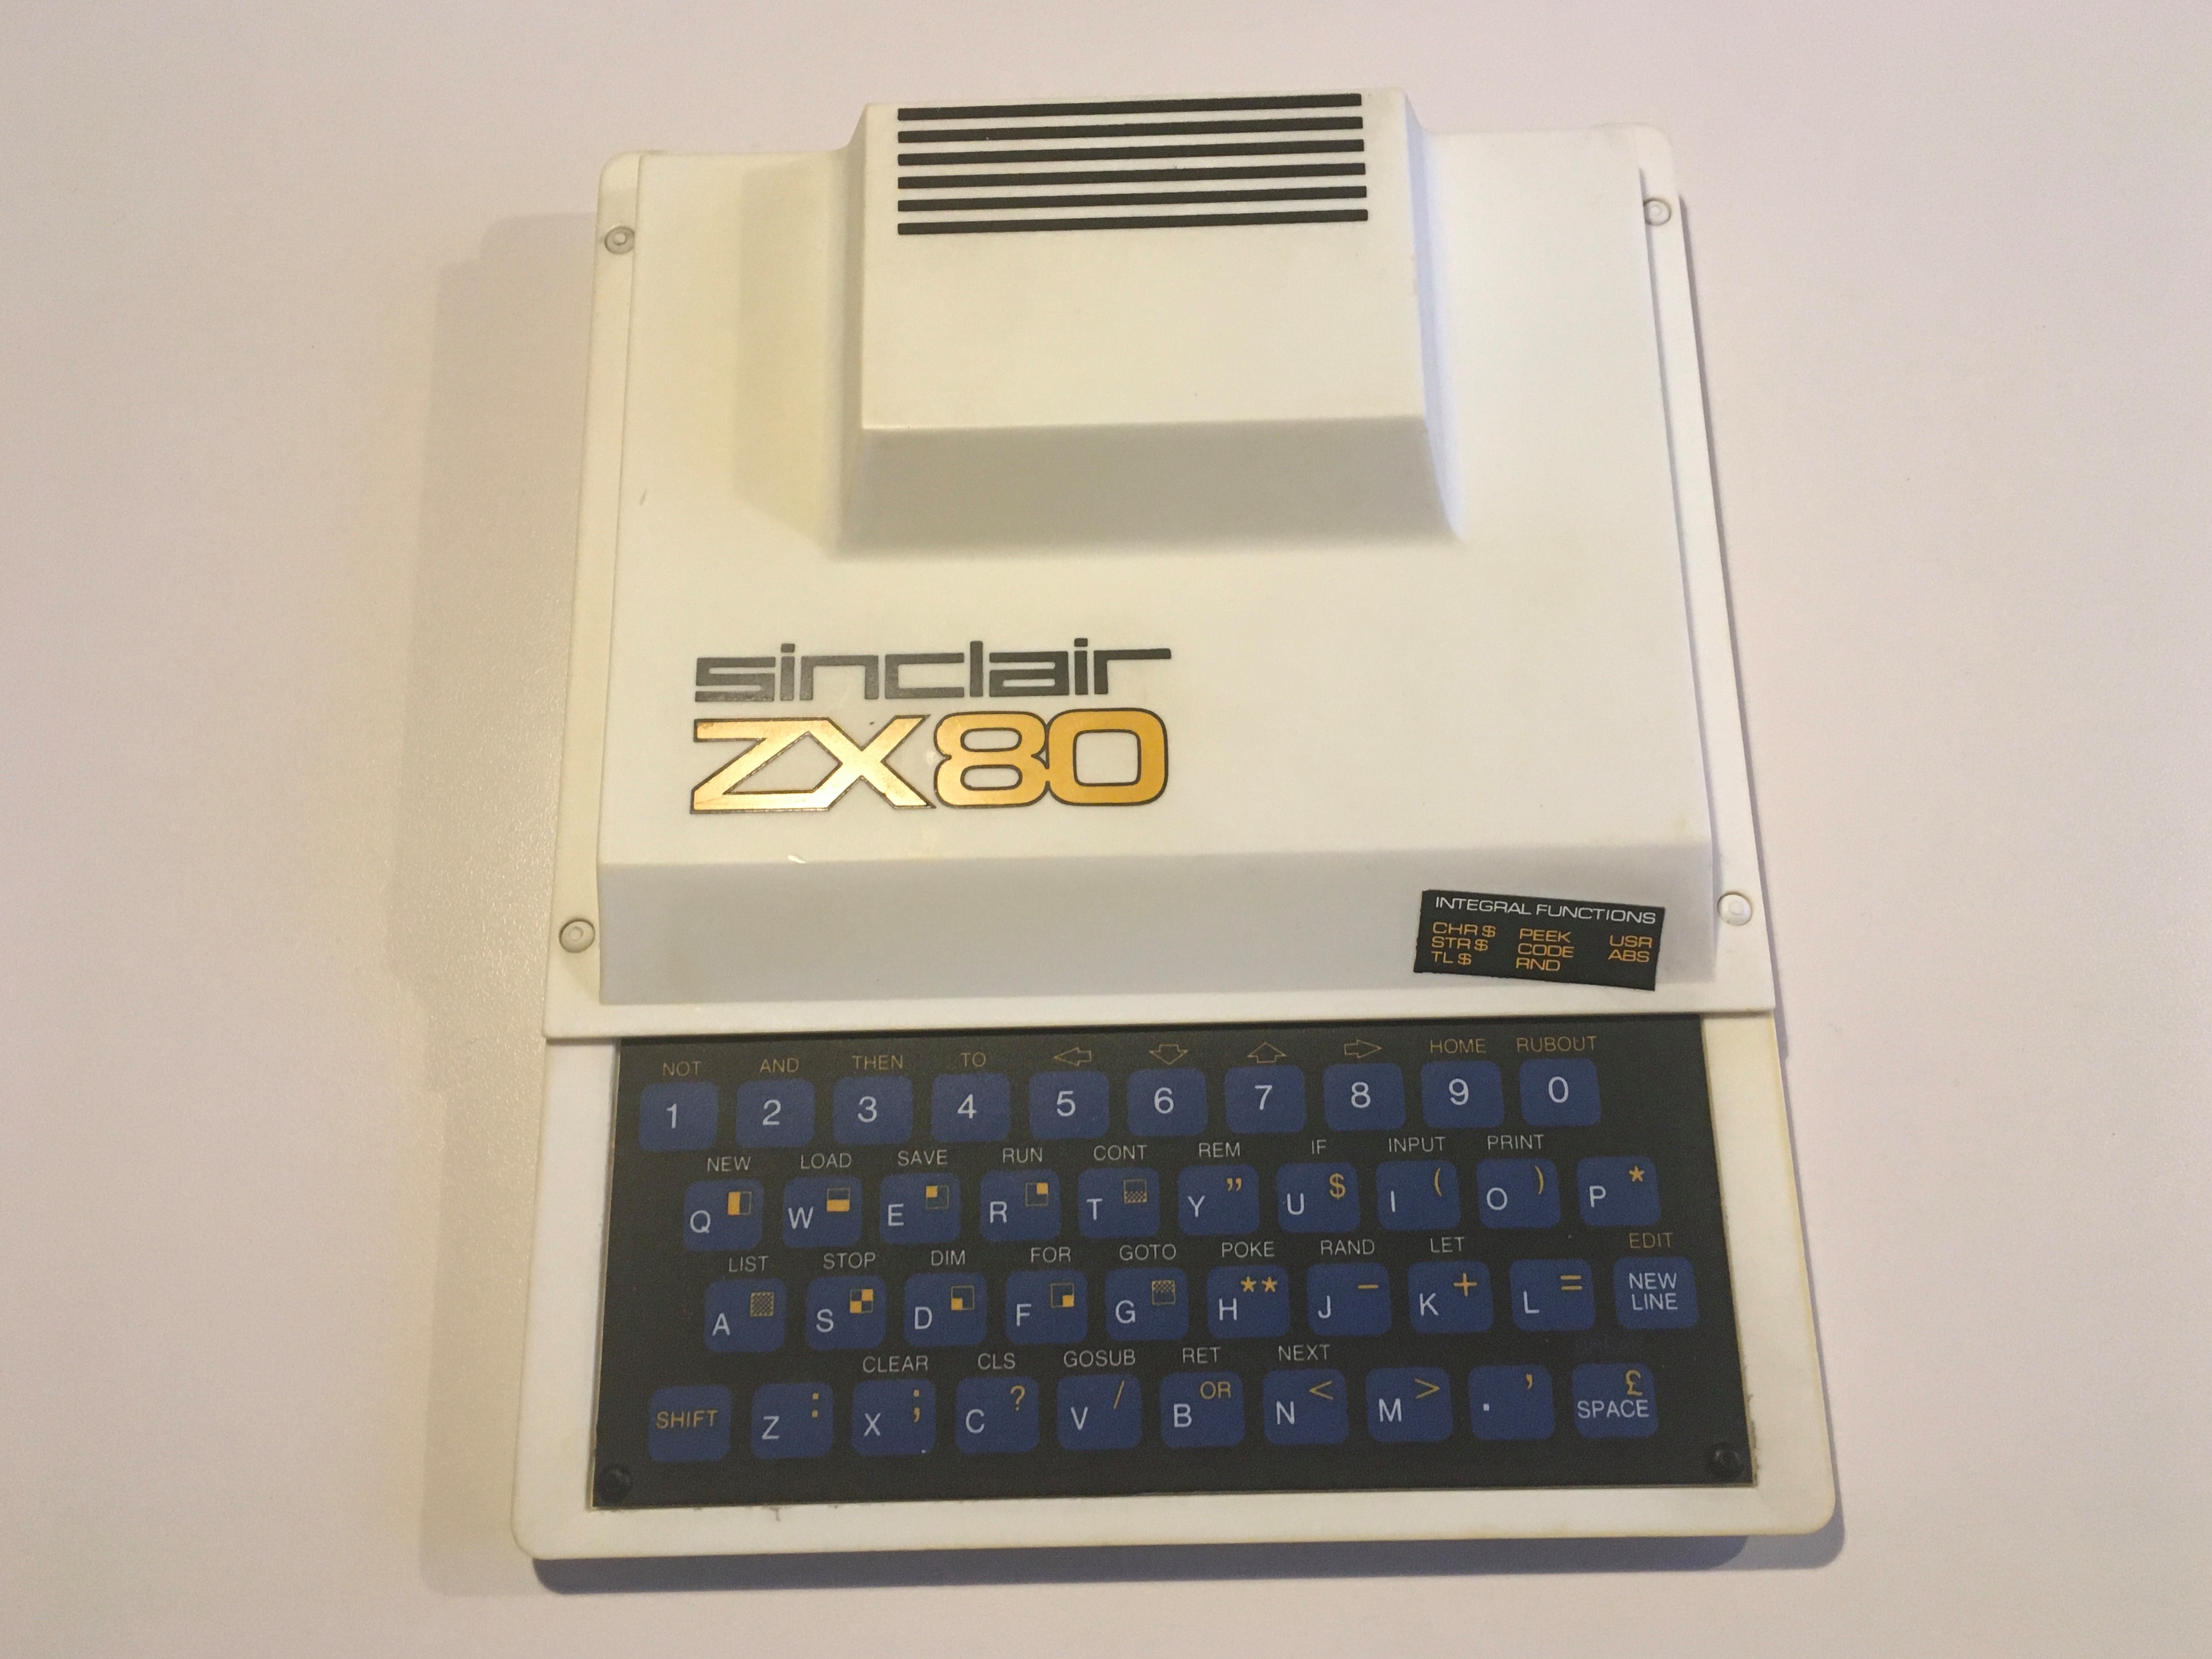 ZX80 image, screenshot or loading screen